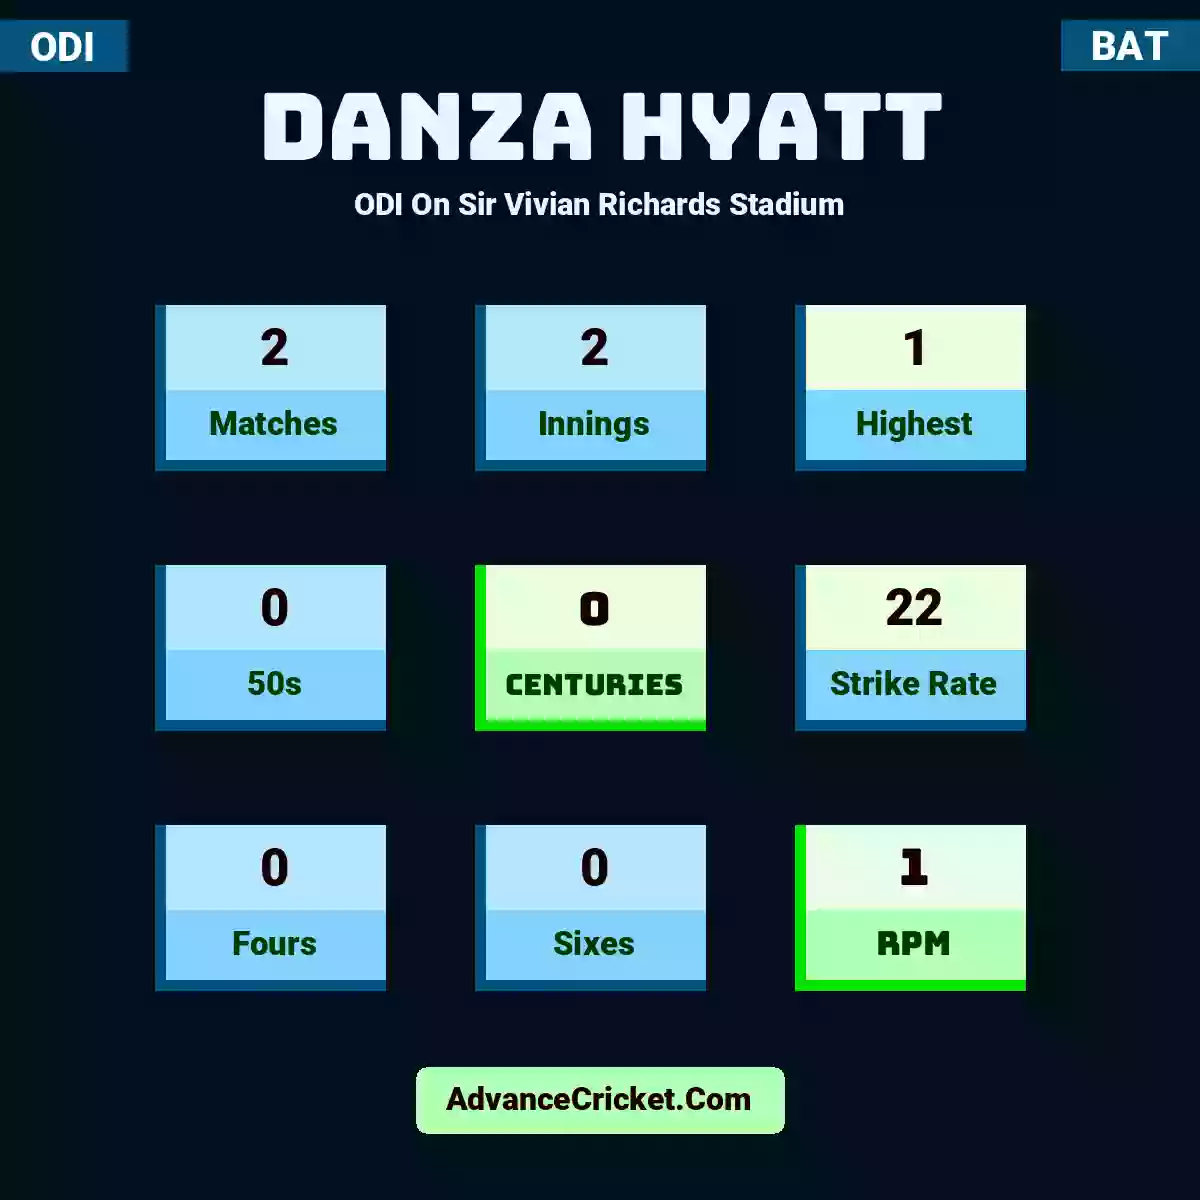 Danza Hyatt ODI  On Sir Vivian Richards Stadium, Danza Hyatt played 2 matches, scored 1 runs as highest, 0 half-centuries, and 0 centuries, with a strike rate of 22. D.Hyatt hit 0 fours and 0 sixes, with an RPM of 1.